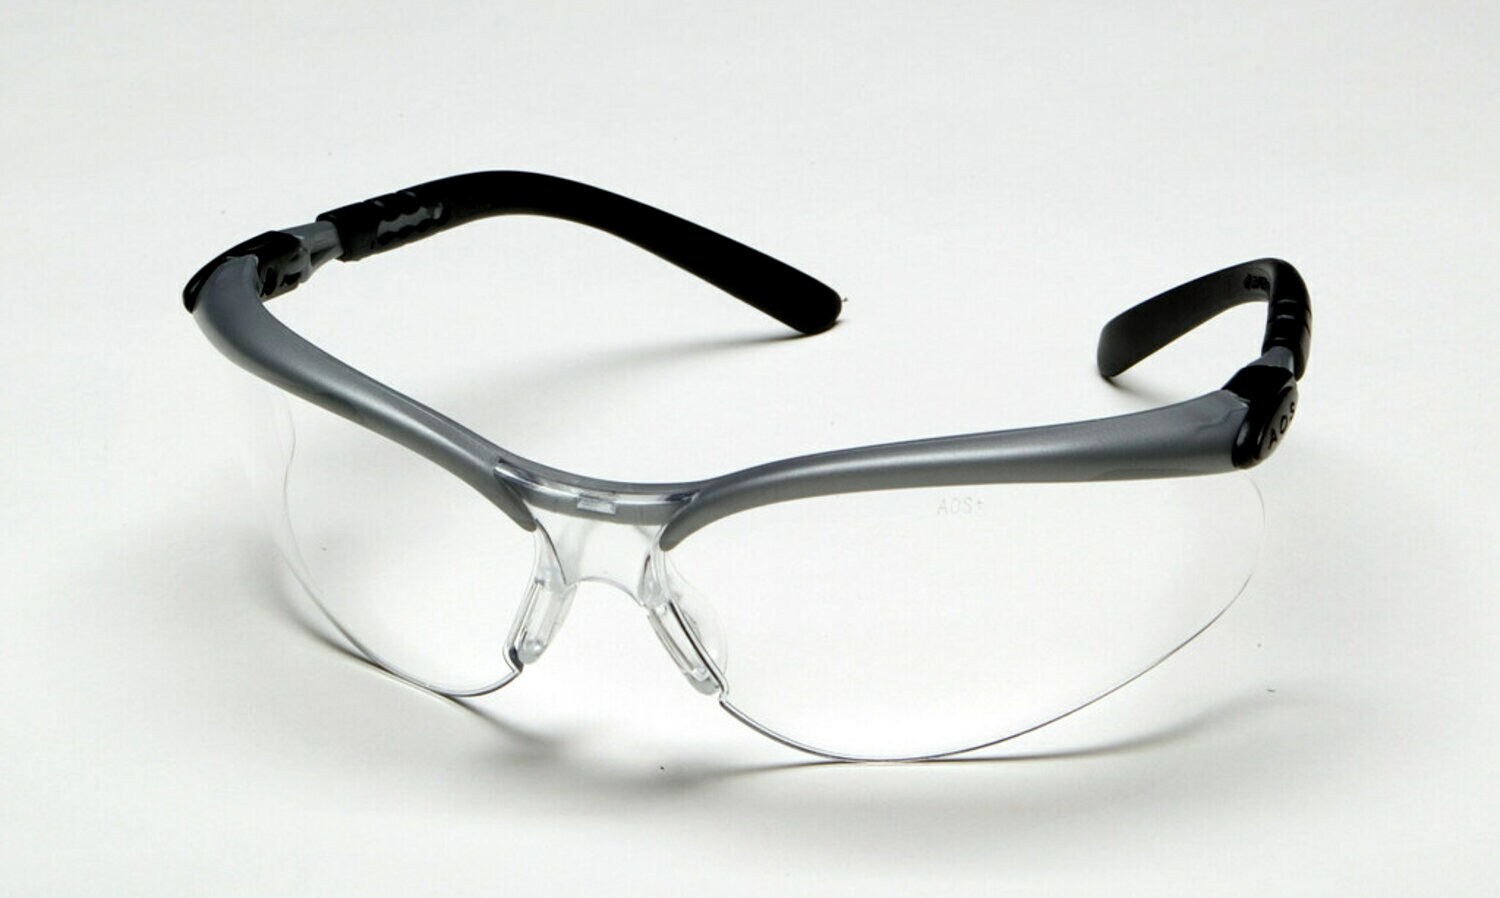 7000052795 - 3M BX Protective Eyewear 11380-00000-20, Clear Anti-Fog Lens,
Silver/Black Frame, 20 ea/Case